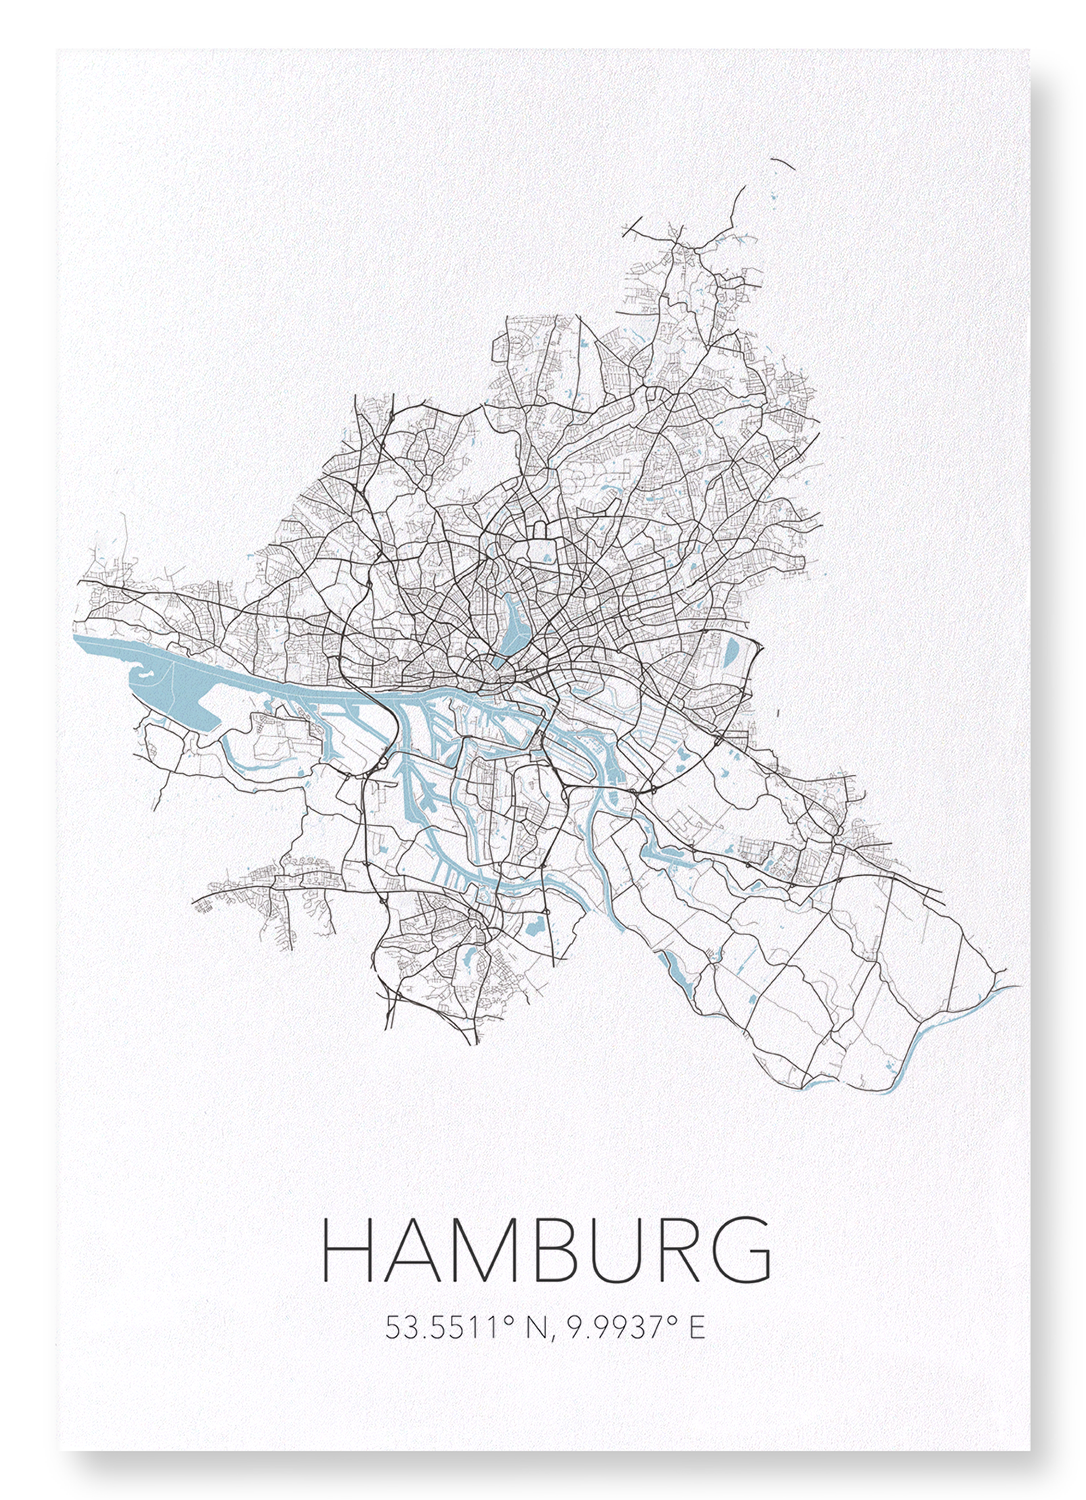 HAMBURG CUTOUT: Map Cutout Art Print